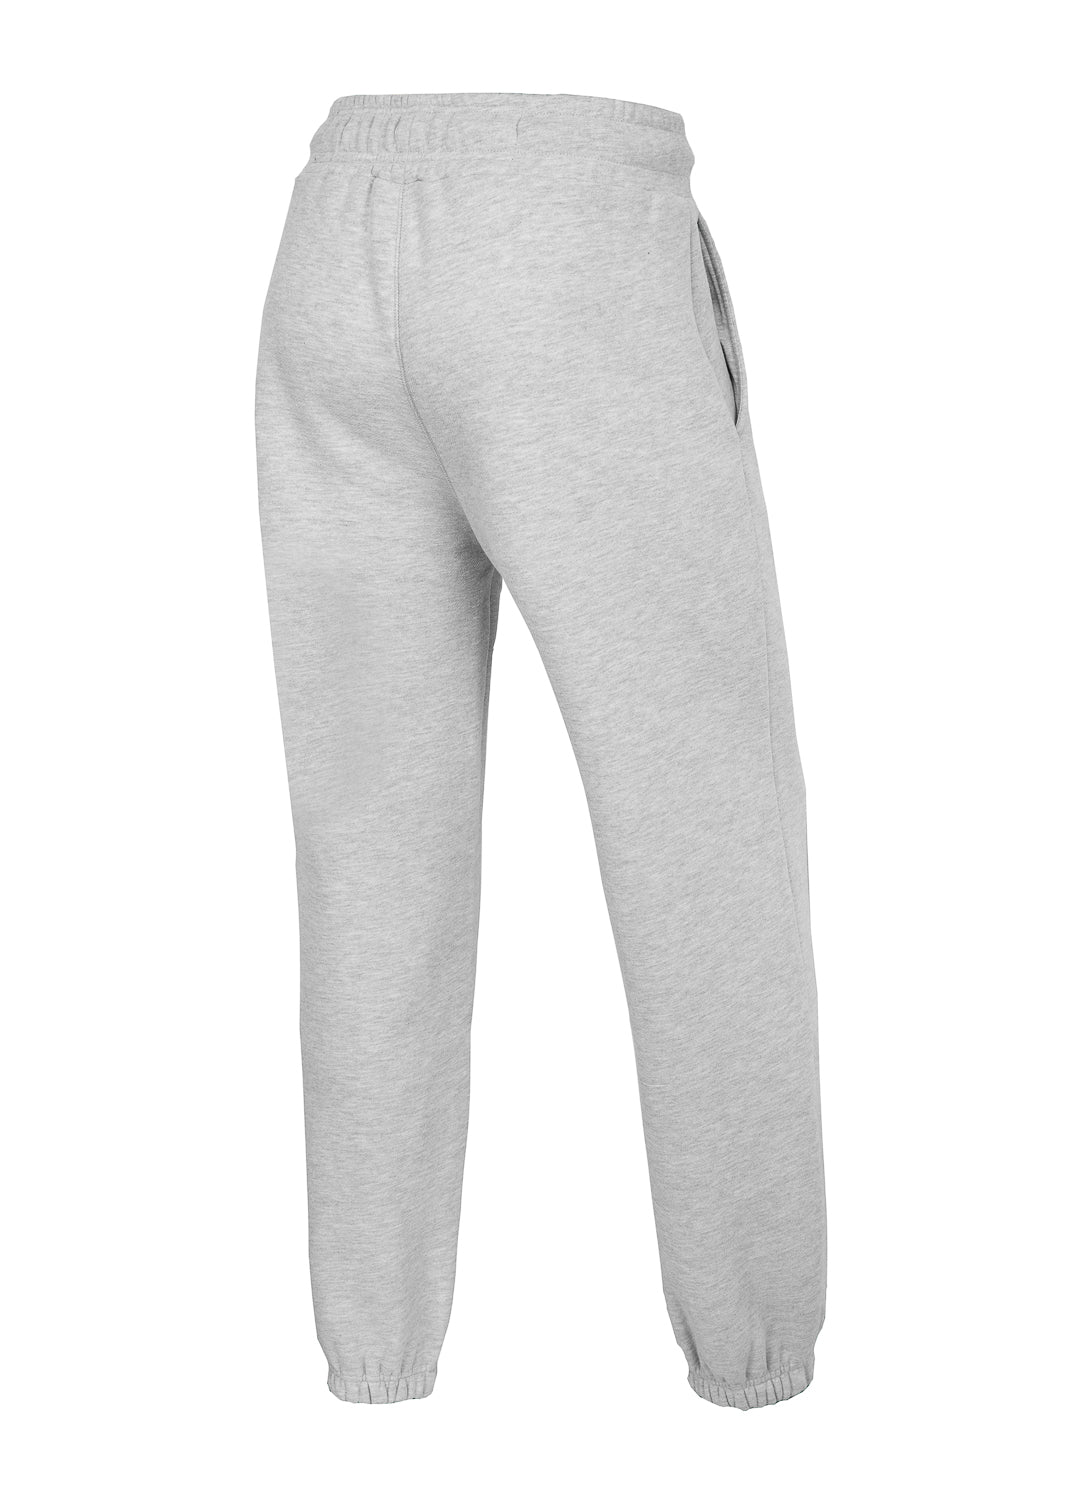 NEW LOGO Oversize Grey Tack Pants.